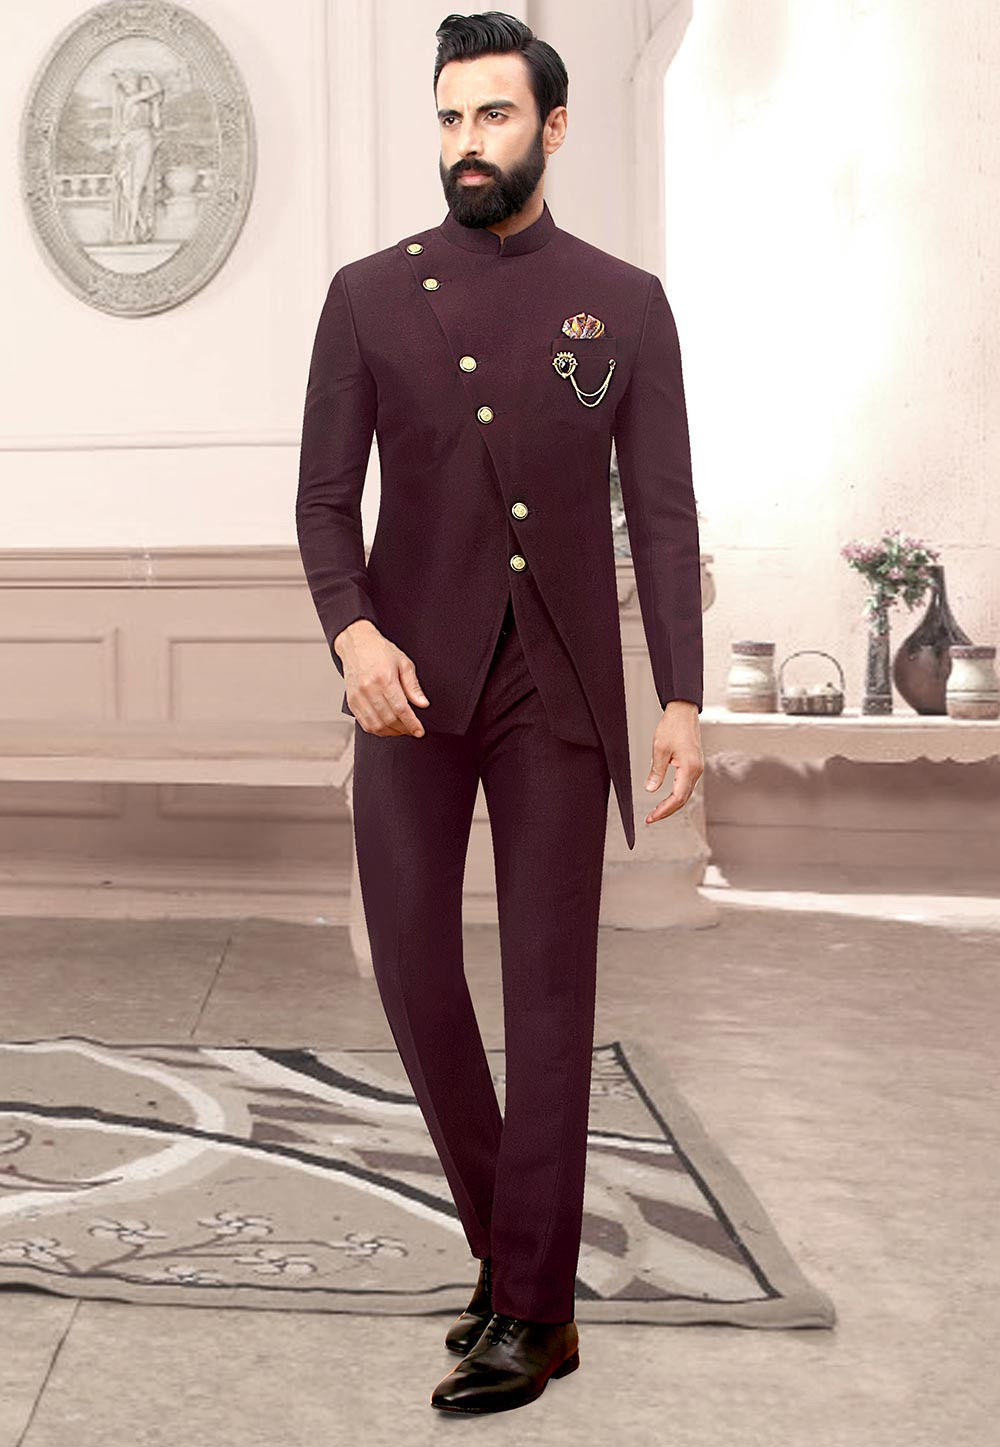 Buy Joley Poley Men's Jodhpuri Suit Polyester Viscose Blend Slim Regular  Fit 2-Piece Coat Suit with Pant Set (Maroon - 40) at Amazon.in